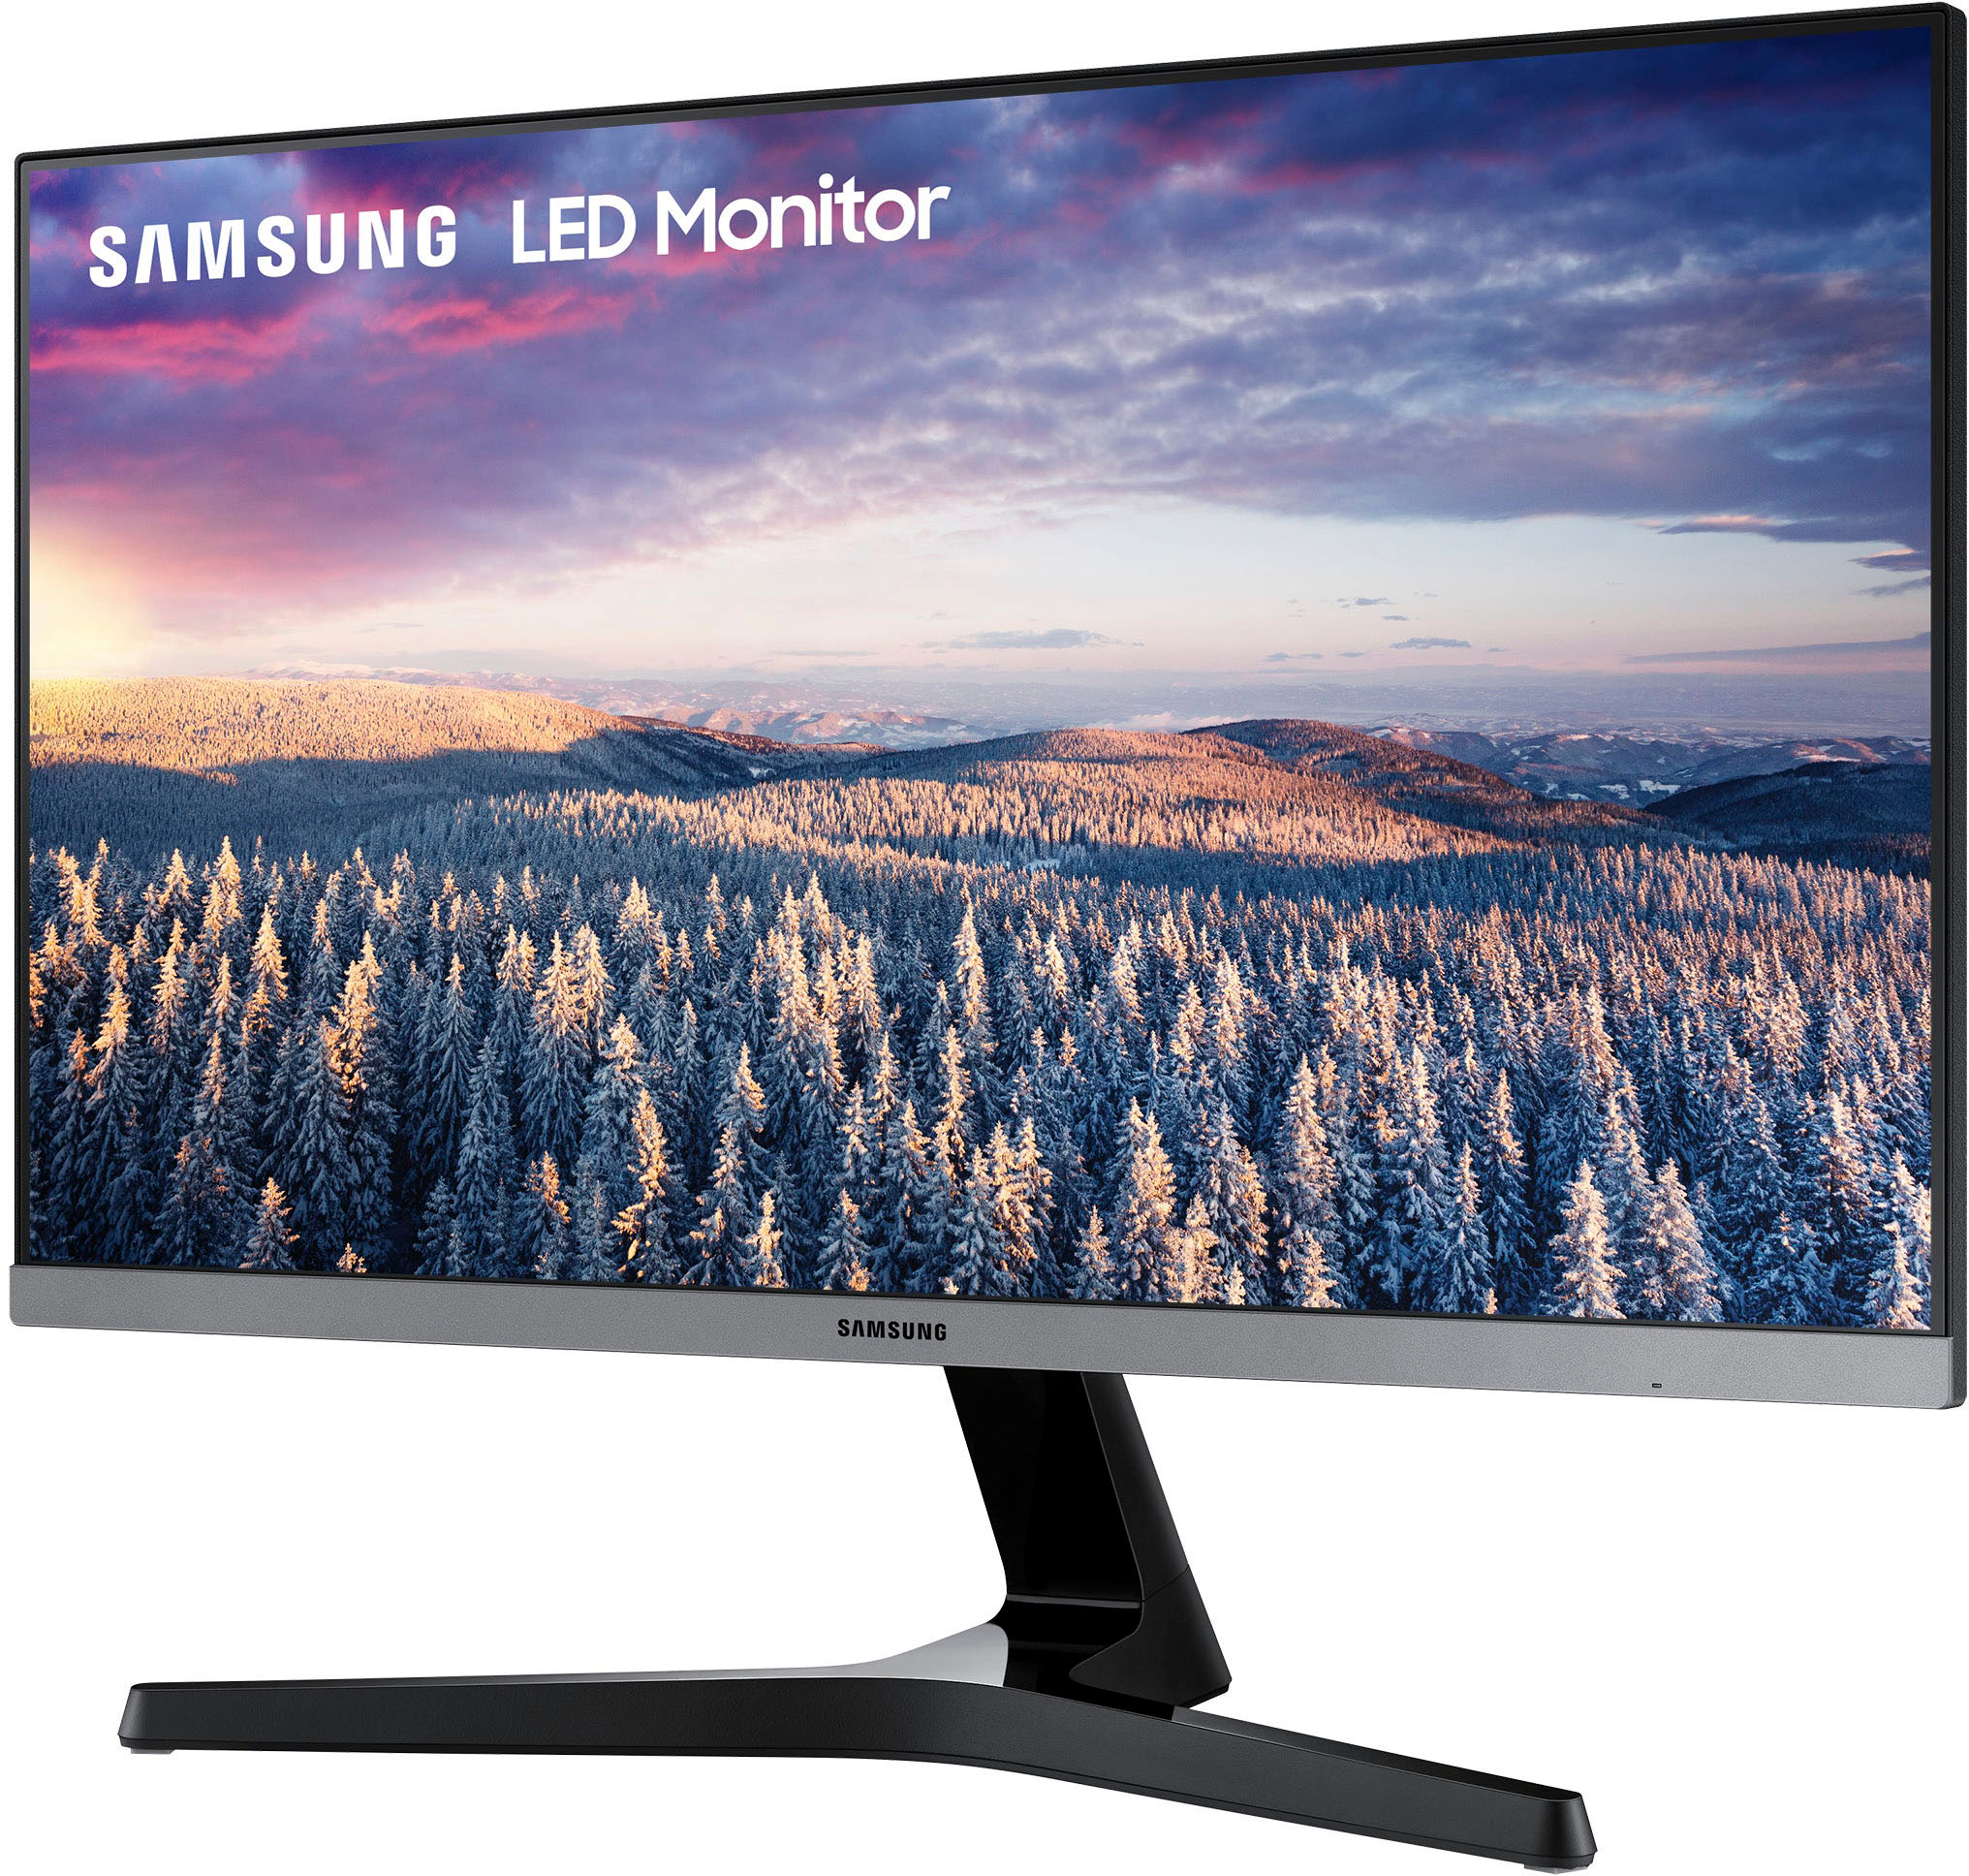 Hechting toevoegen Voorkomen Samsung 24" LED FHD AMD FreeSync Monitor with bezel-less design (HDMI,  D-sub) Black LS24R35AFHNXZA - Best Buy